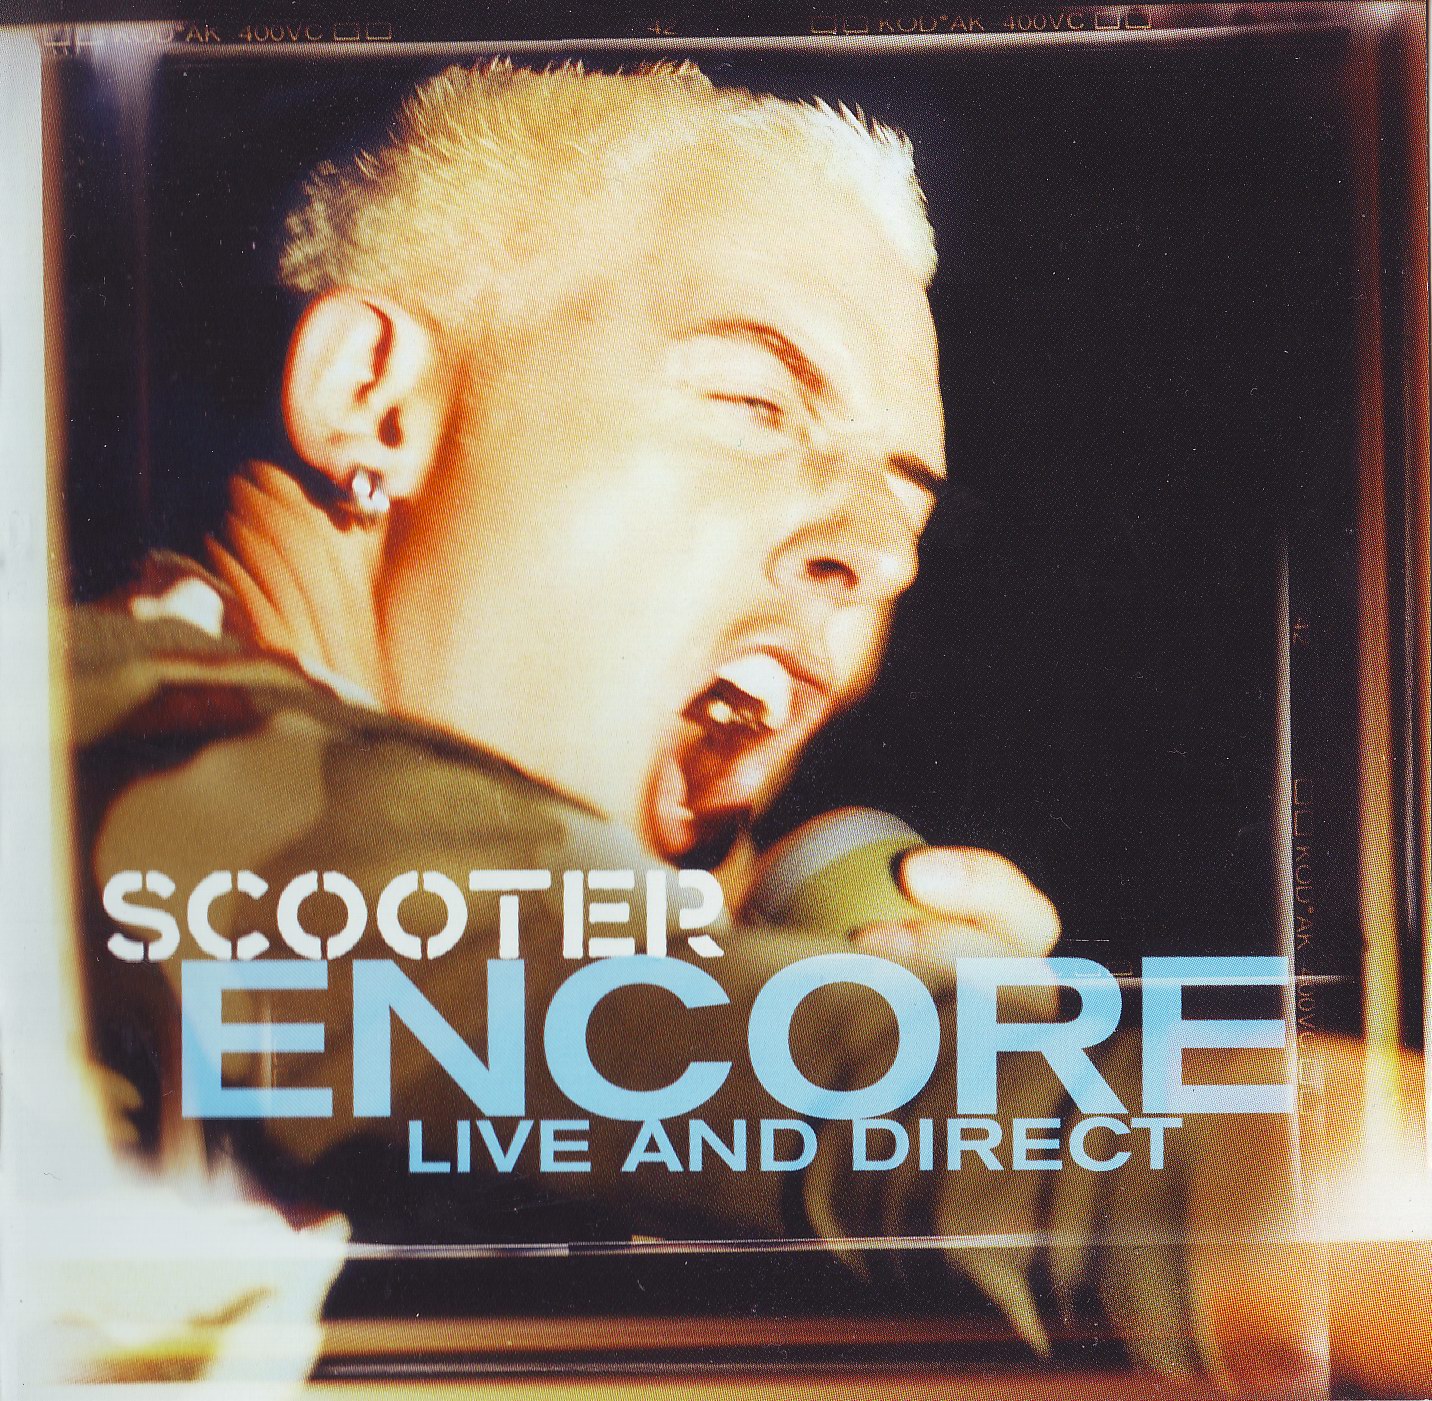 Encore CD color cover